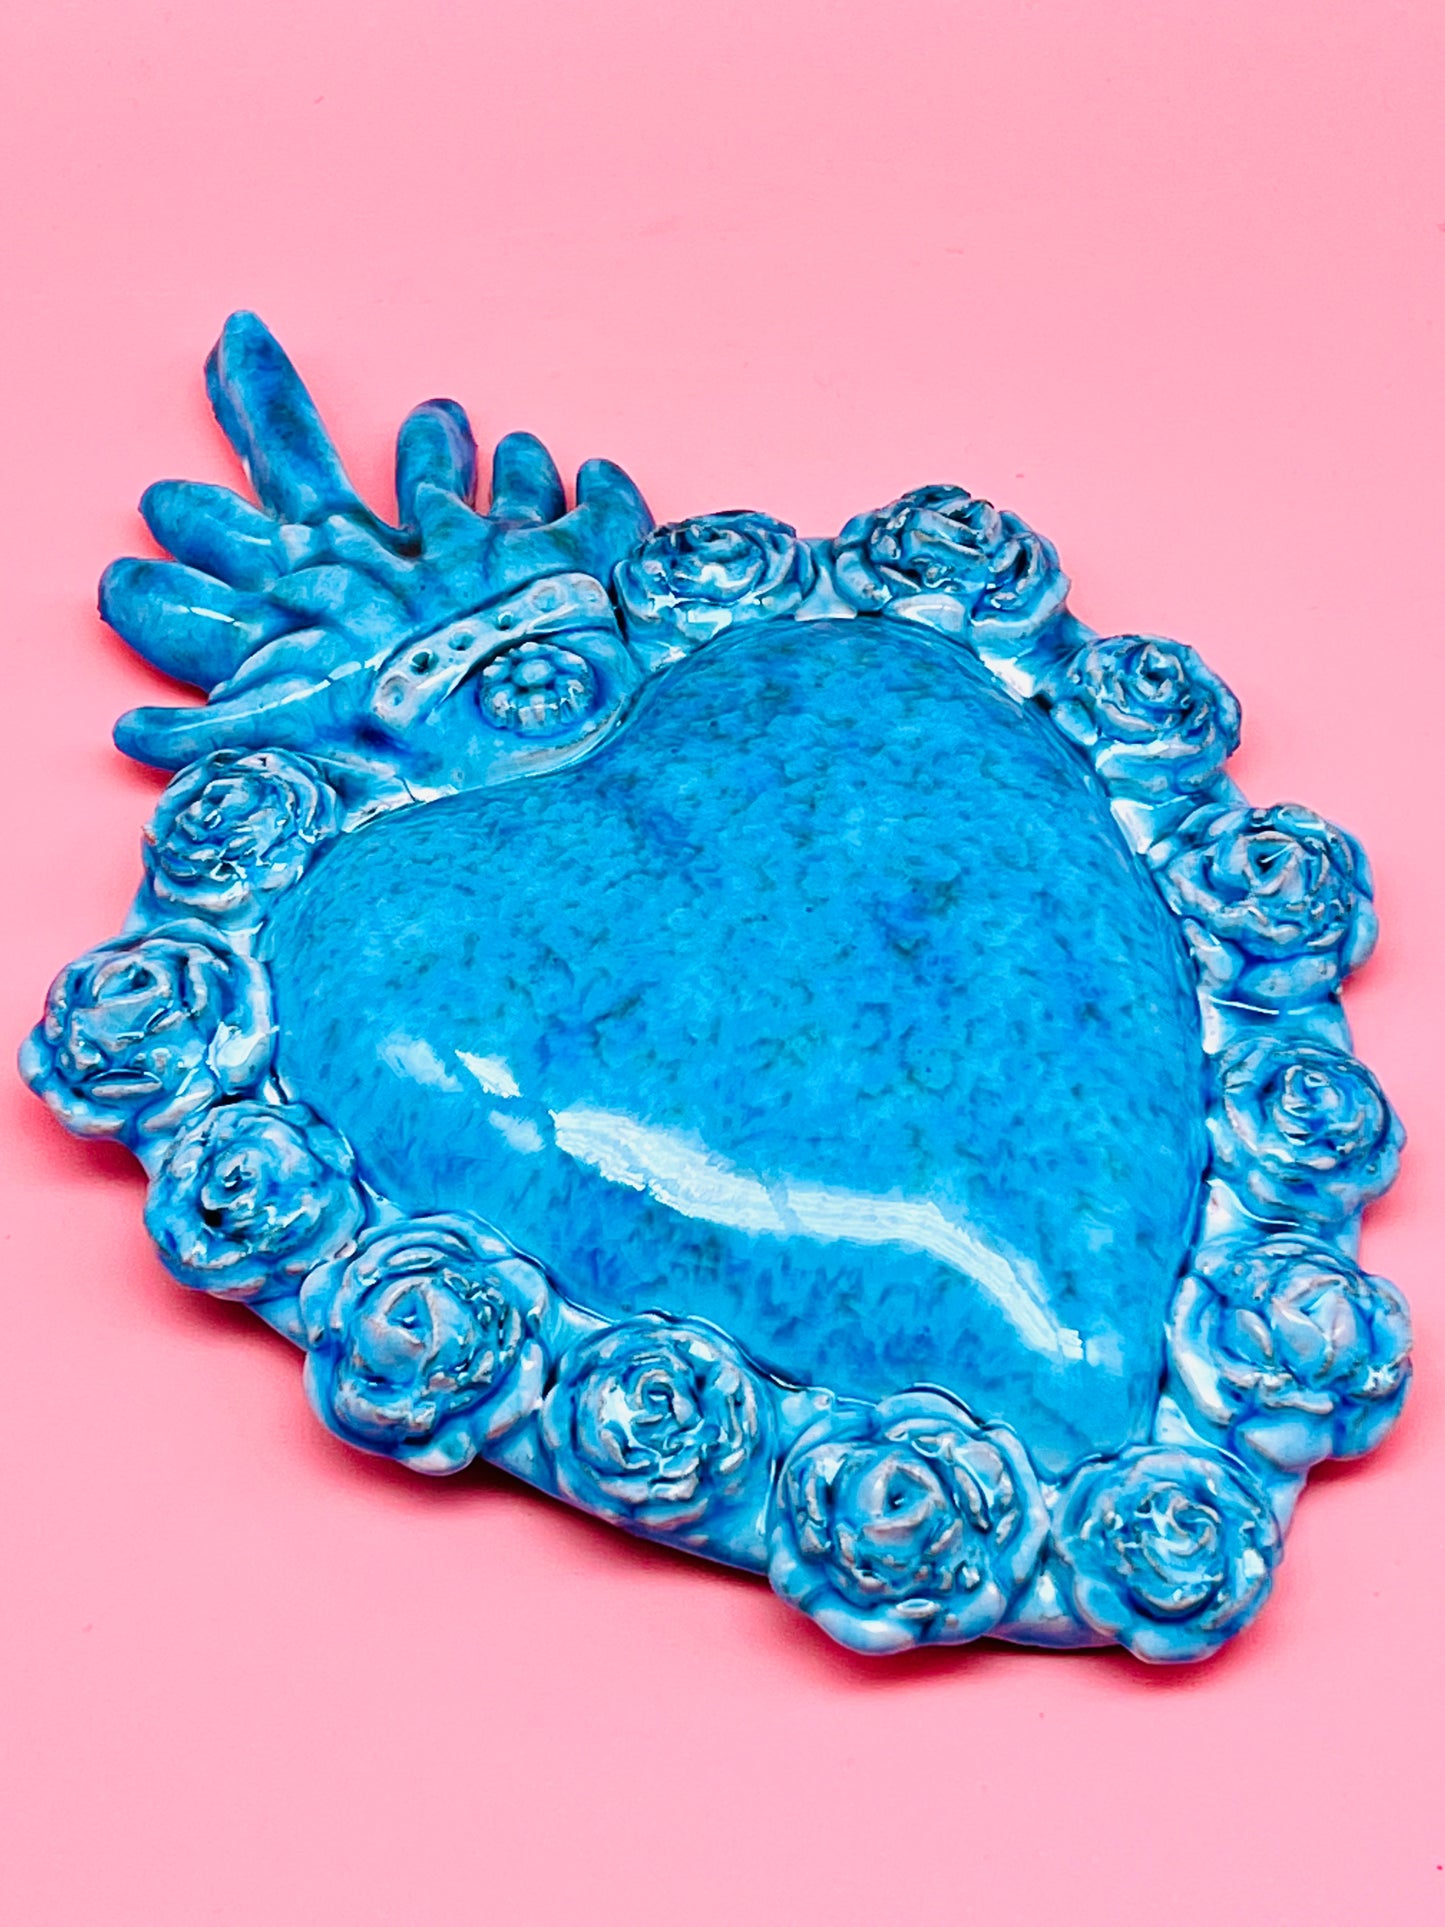 Sagrado corazón de cerámica azul